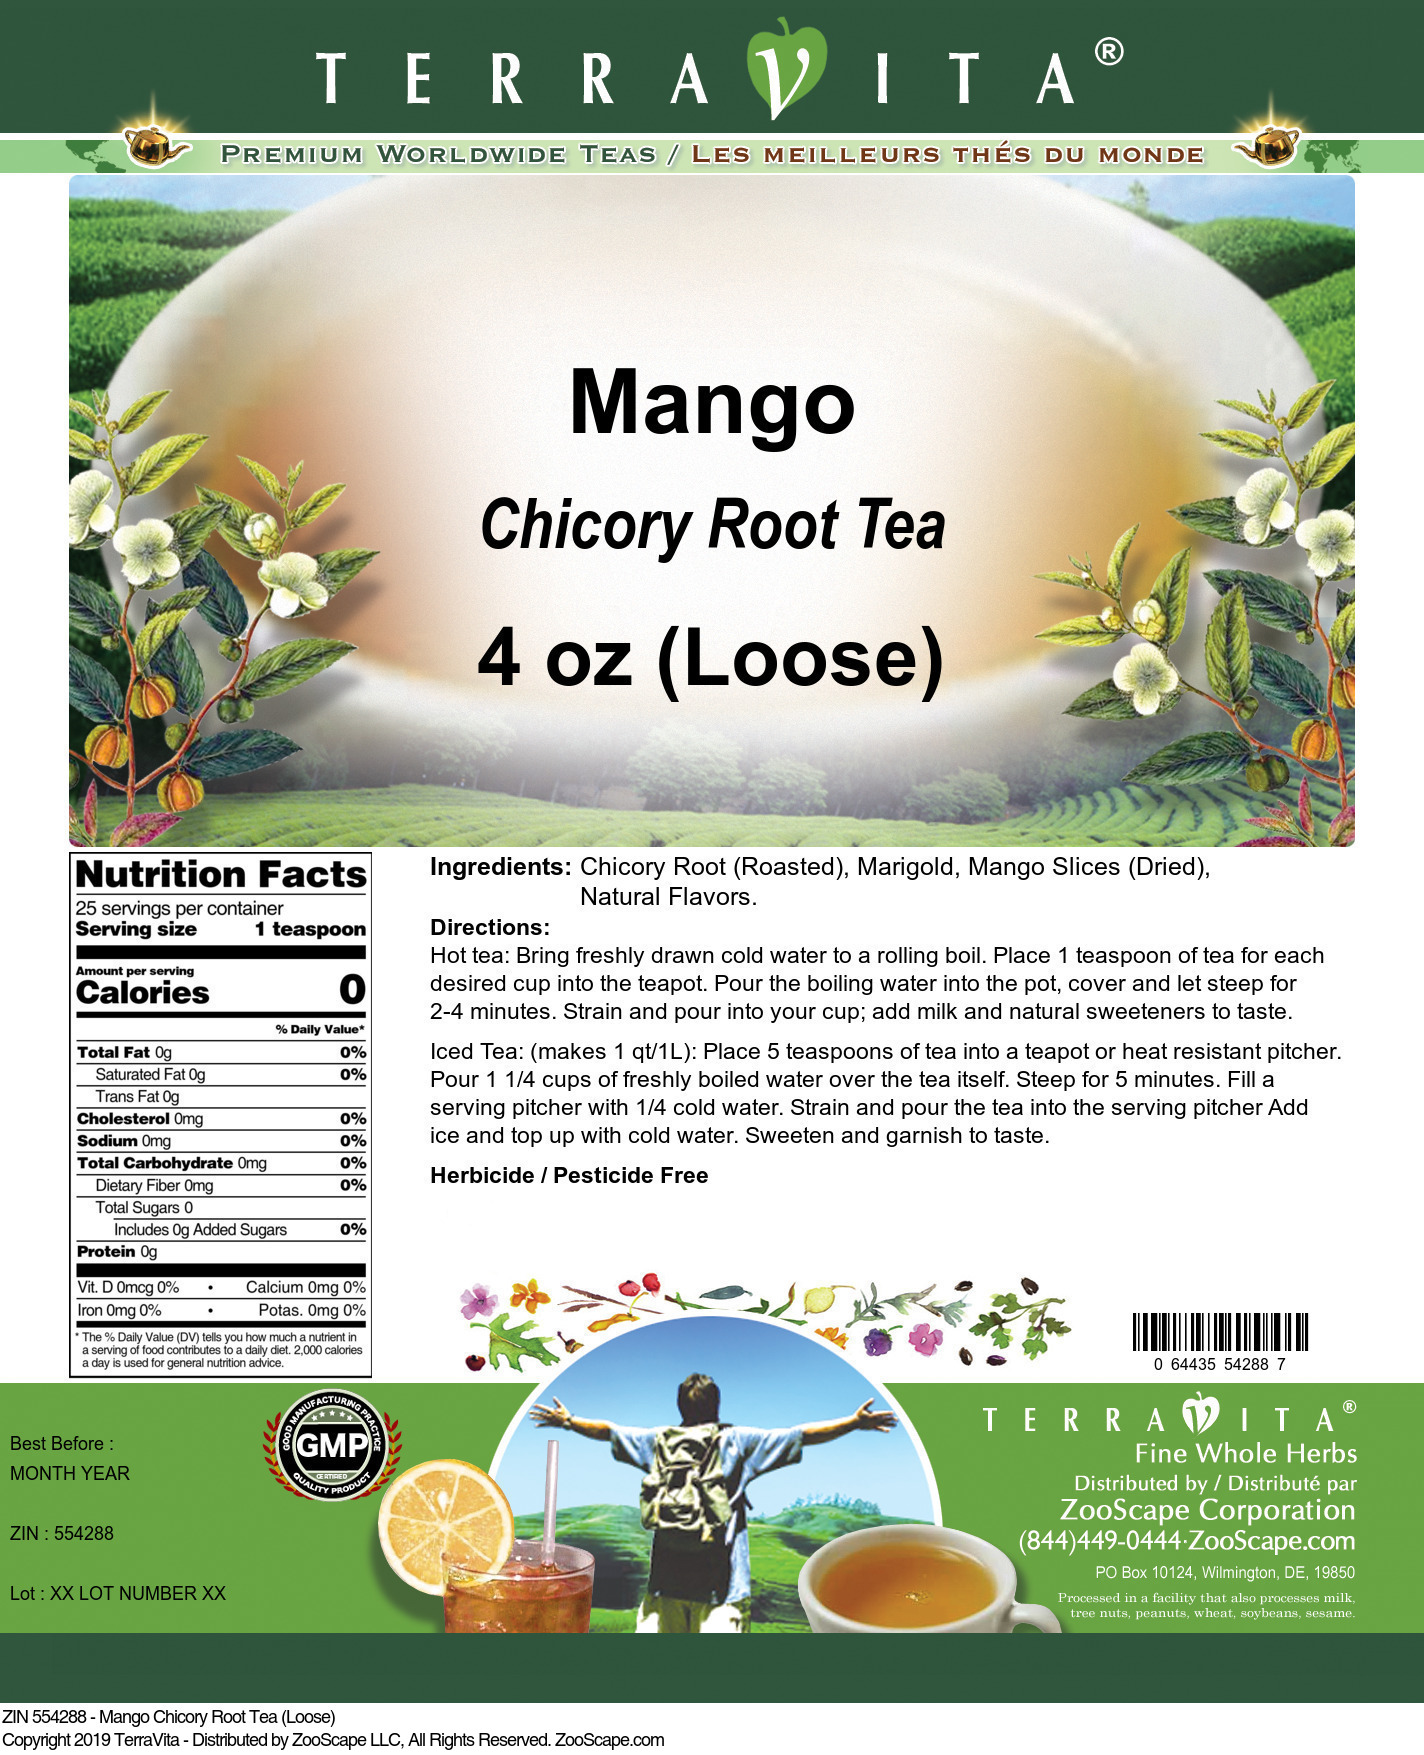 Mango Chicory Root Tea (Loose) - Label